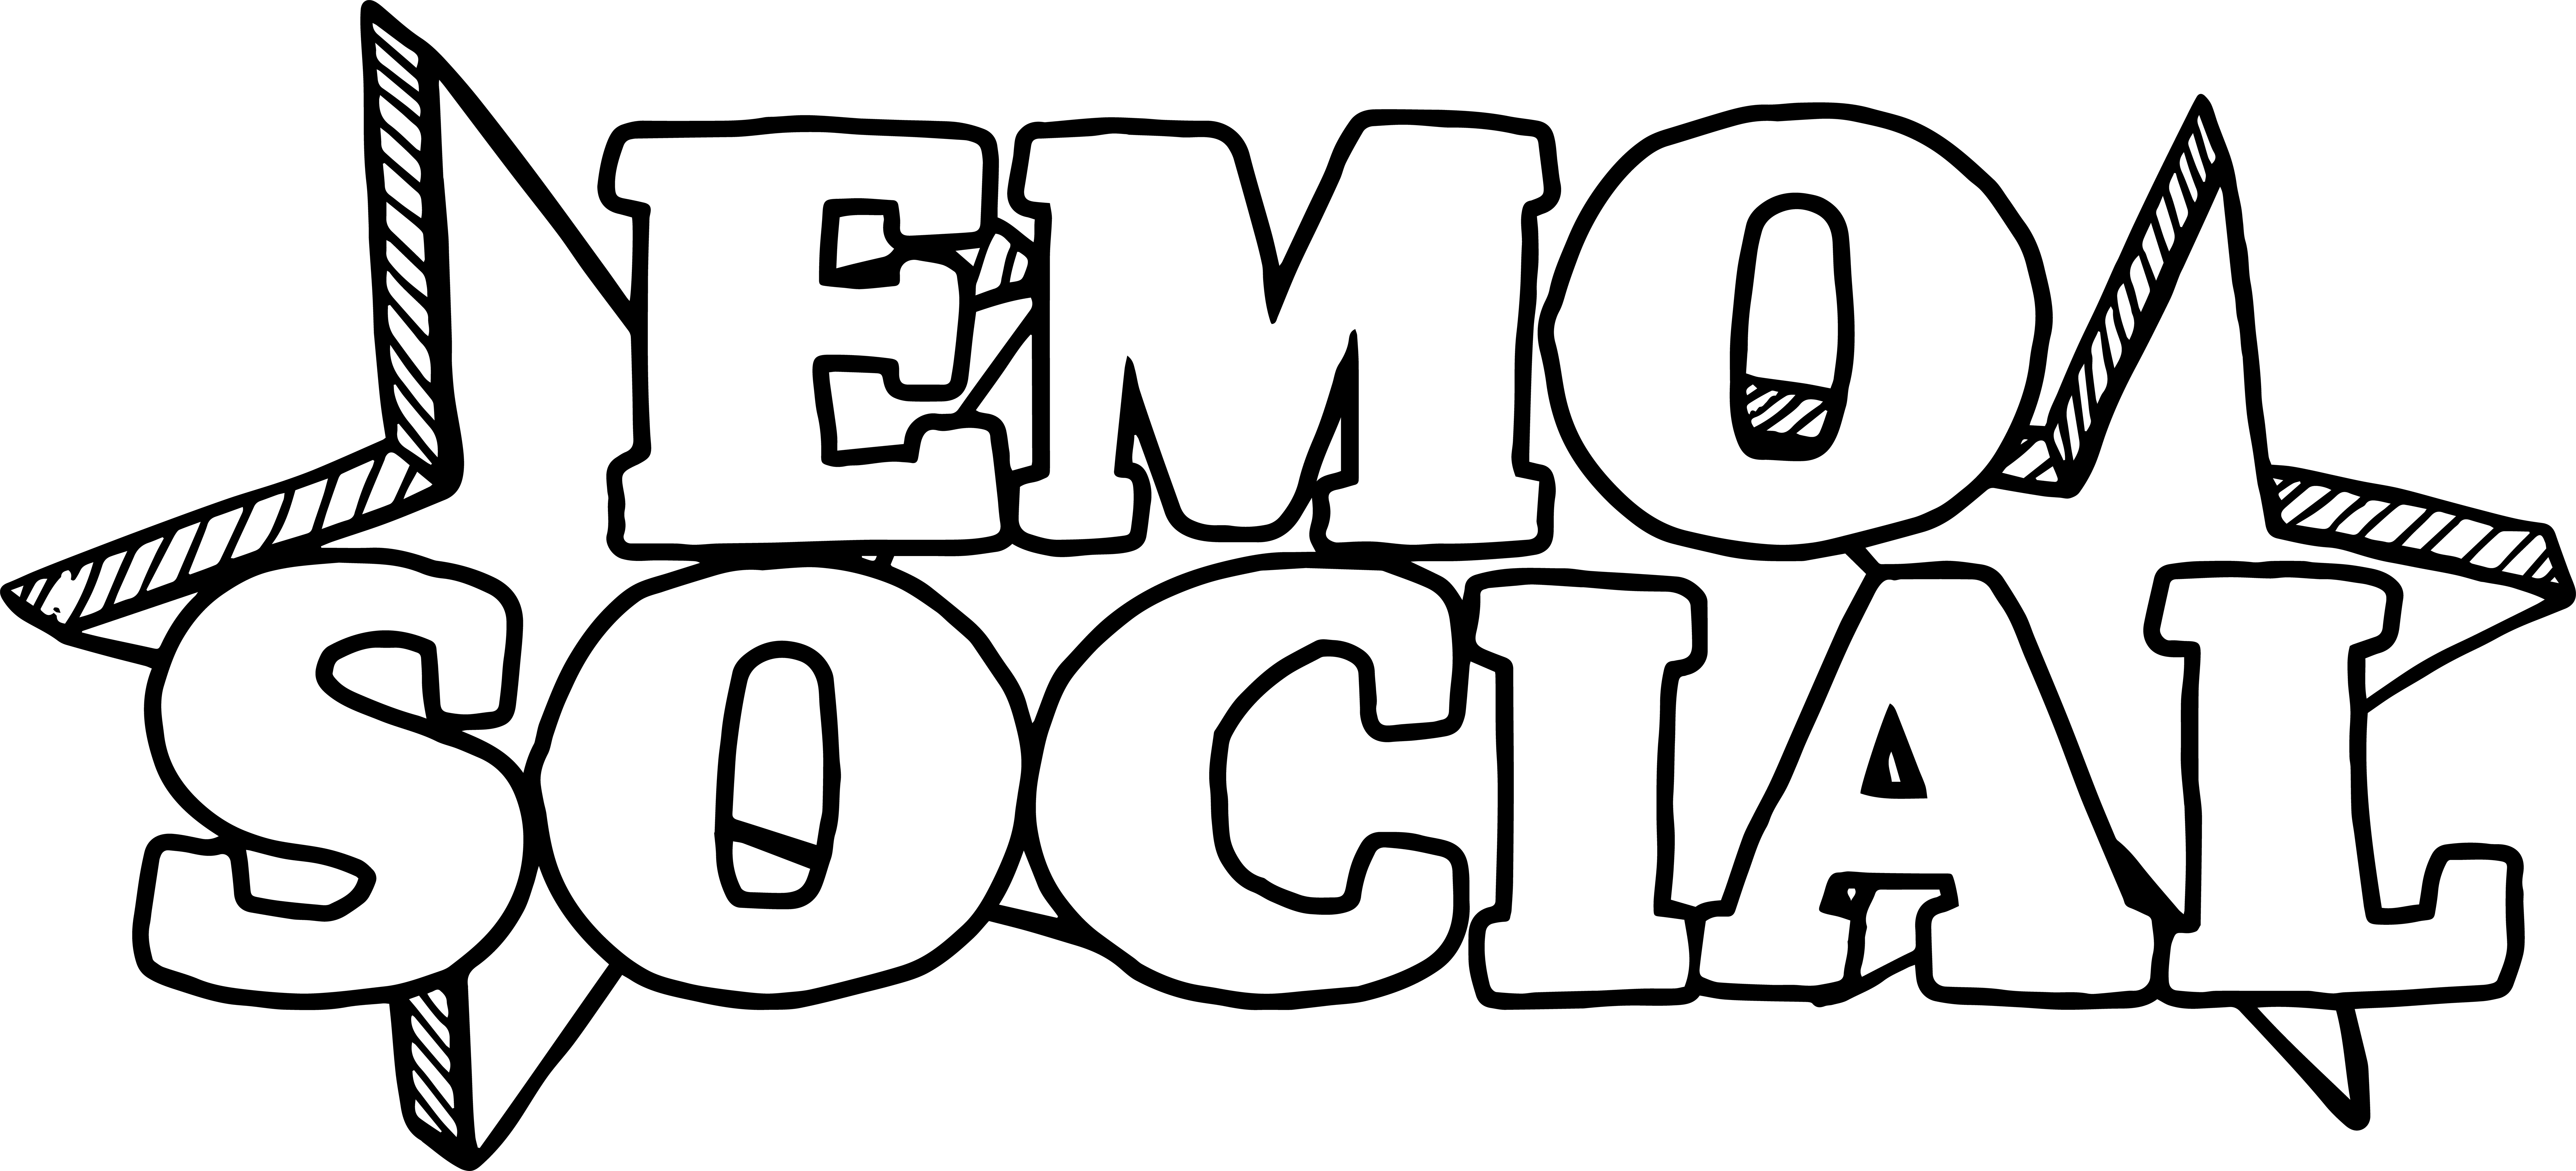 Emo Social